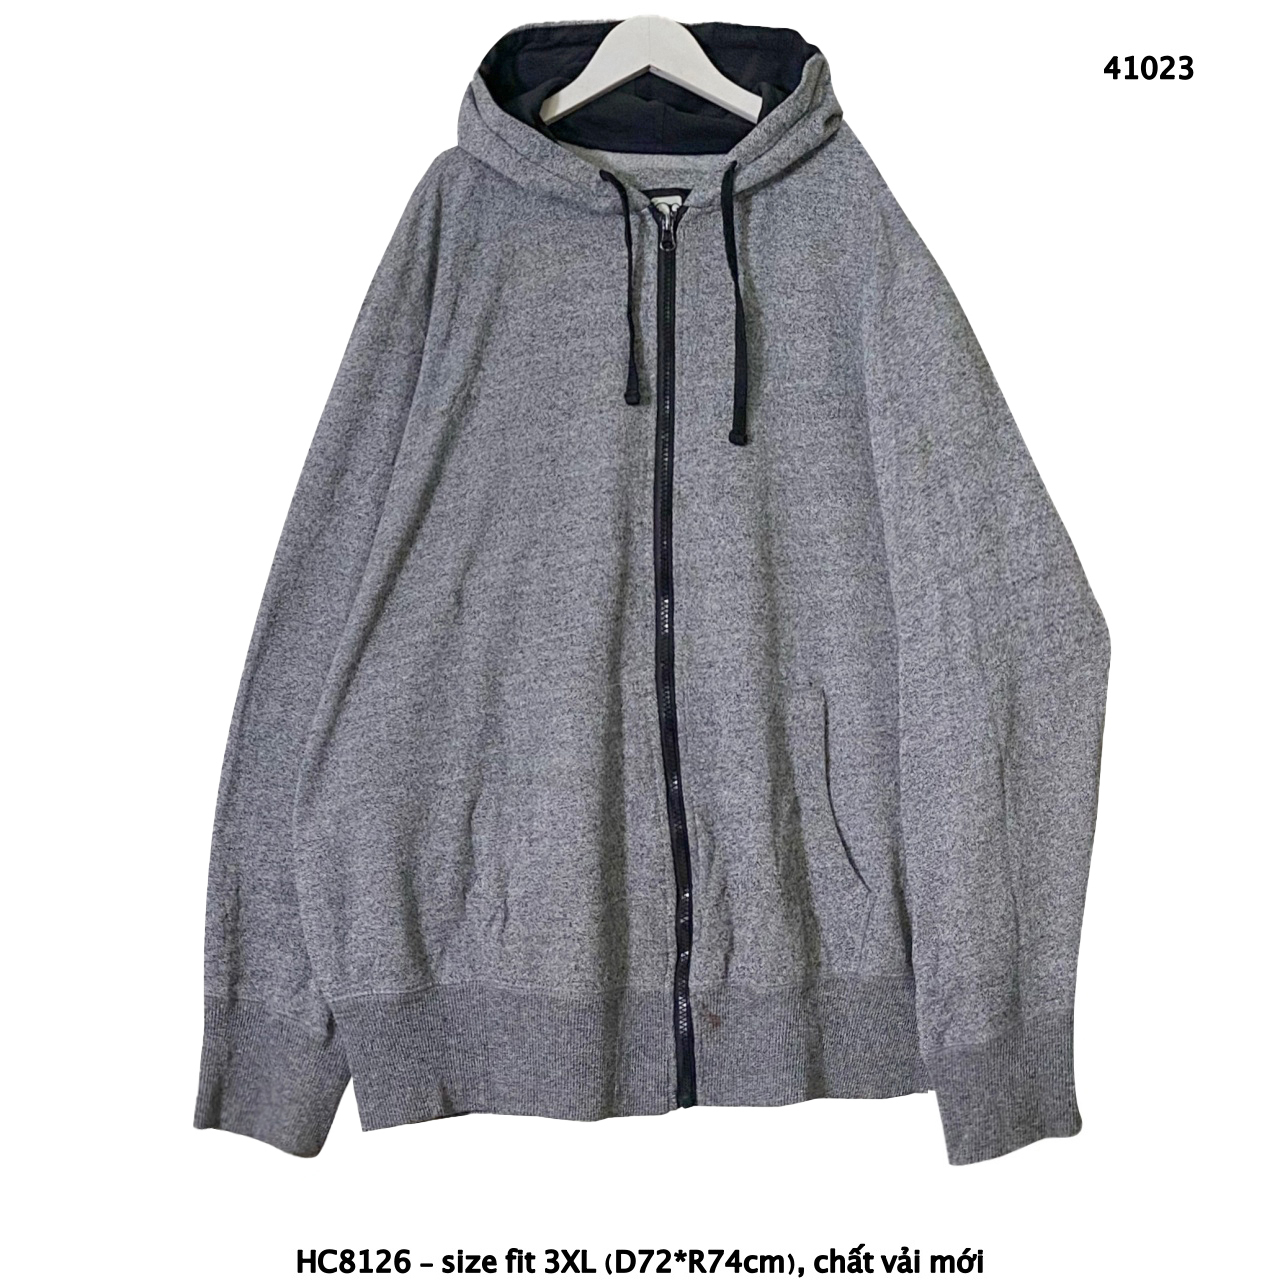 Áo Hoodie oversize áo sweater oversize 2hand cho nam và nữ chất dày size lớn form rộng tay bồng (sale) 110523